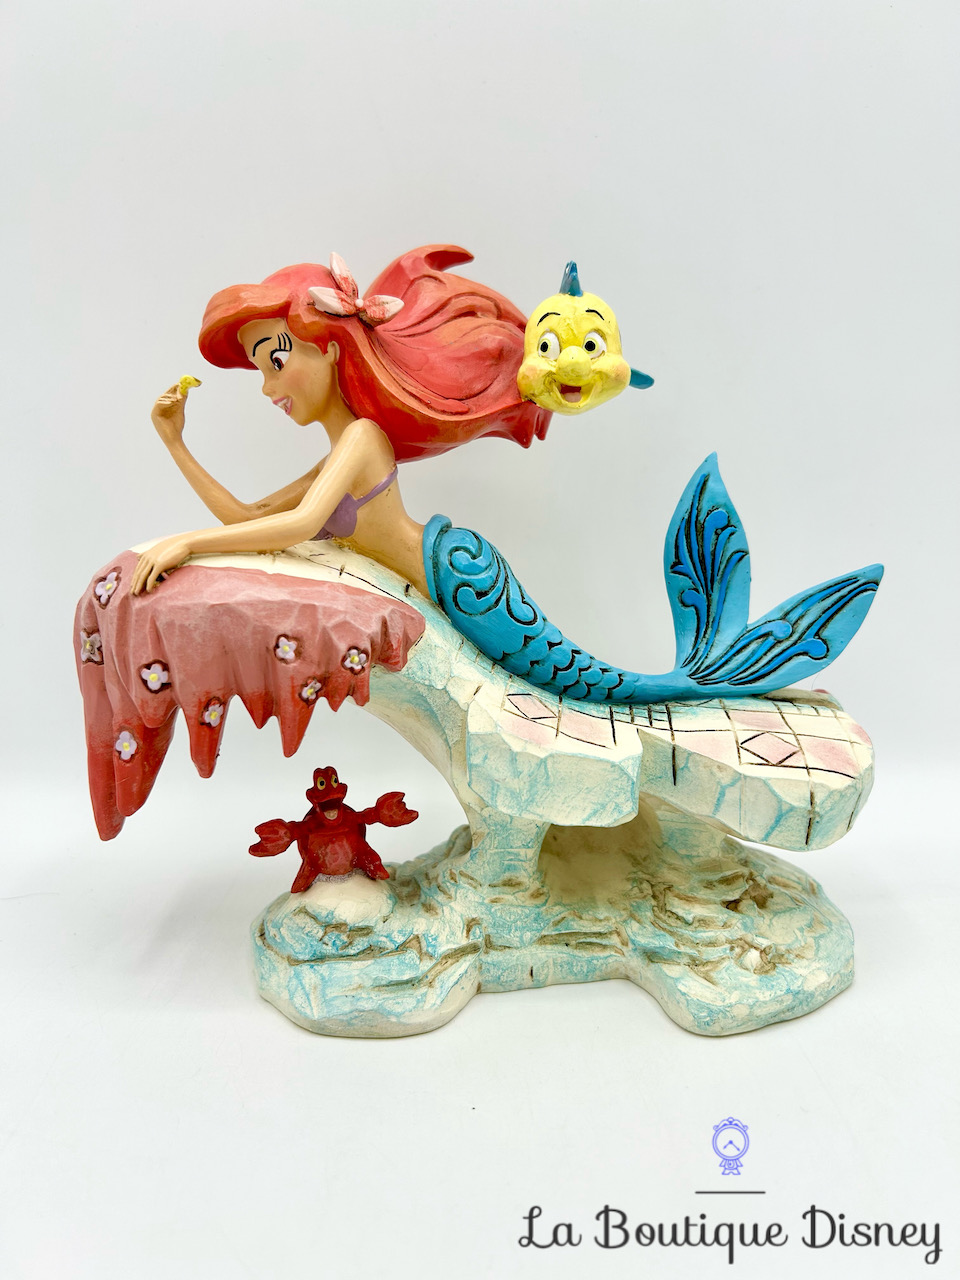 figurine-ariel-dreaming-under-the-sea-jim-shore-disney-traditions-showcase-collection-enesco-la-petite-sirène-5